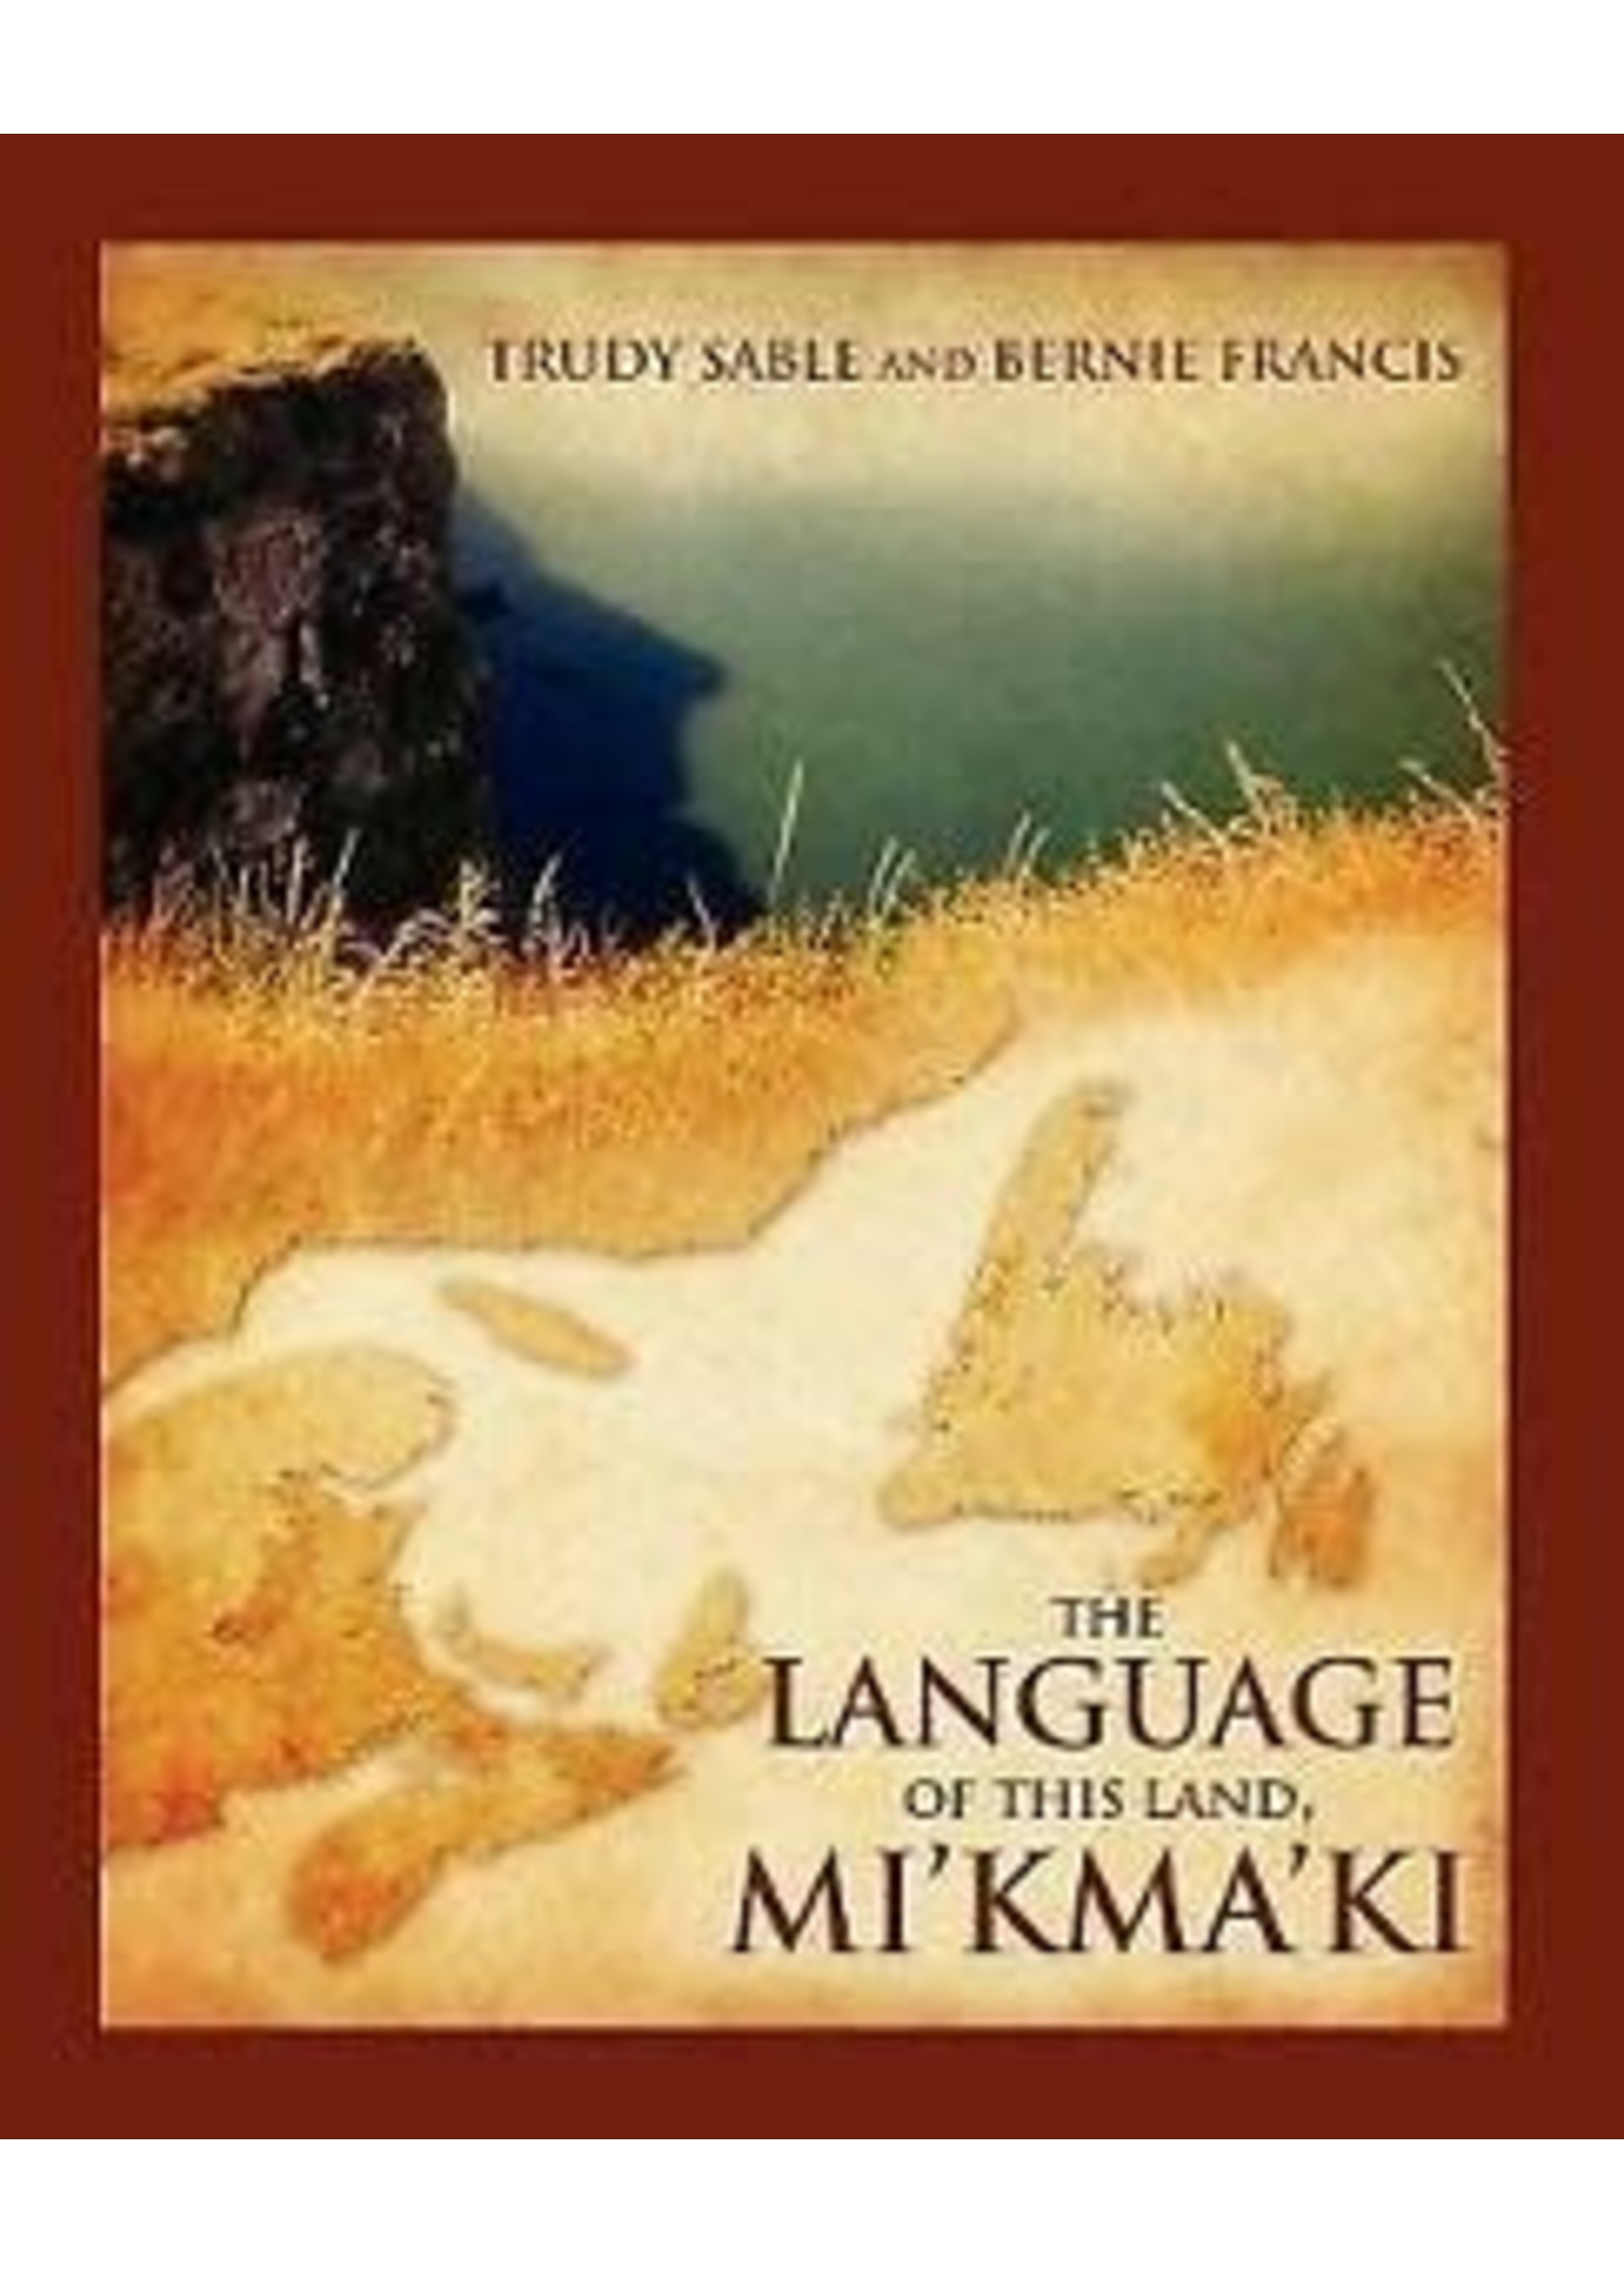 Language of this Land Mi’kma’ki by Trudy Sable